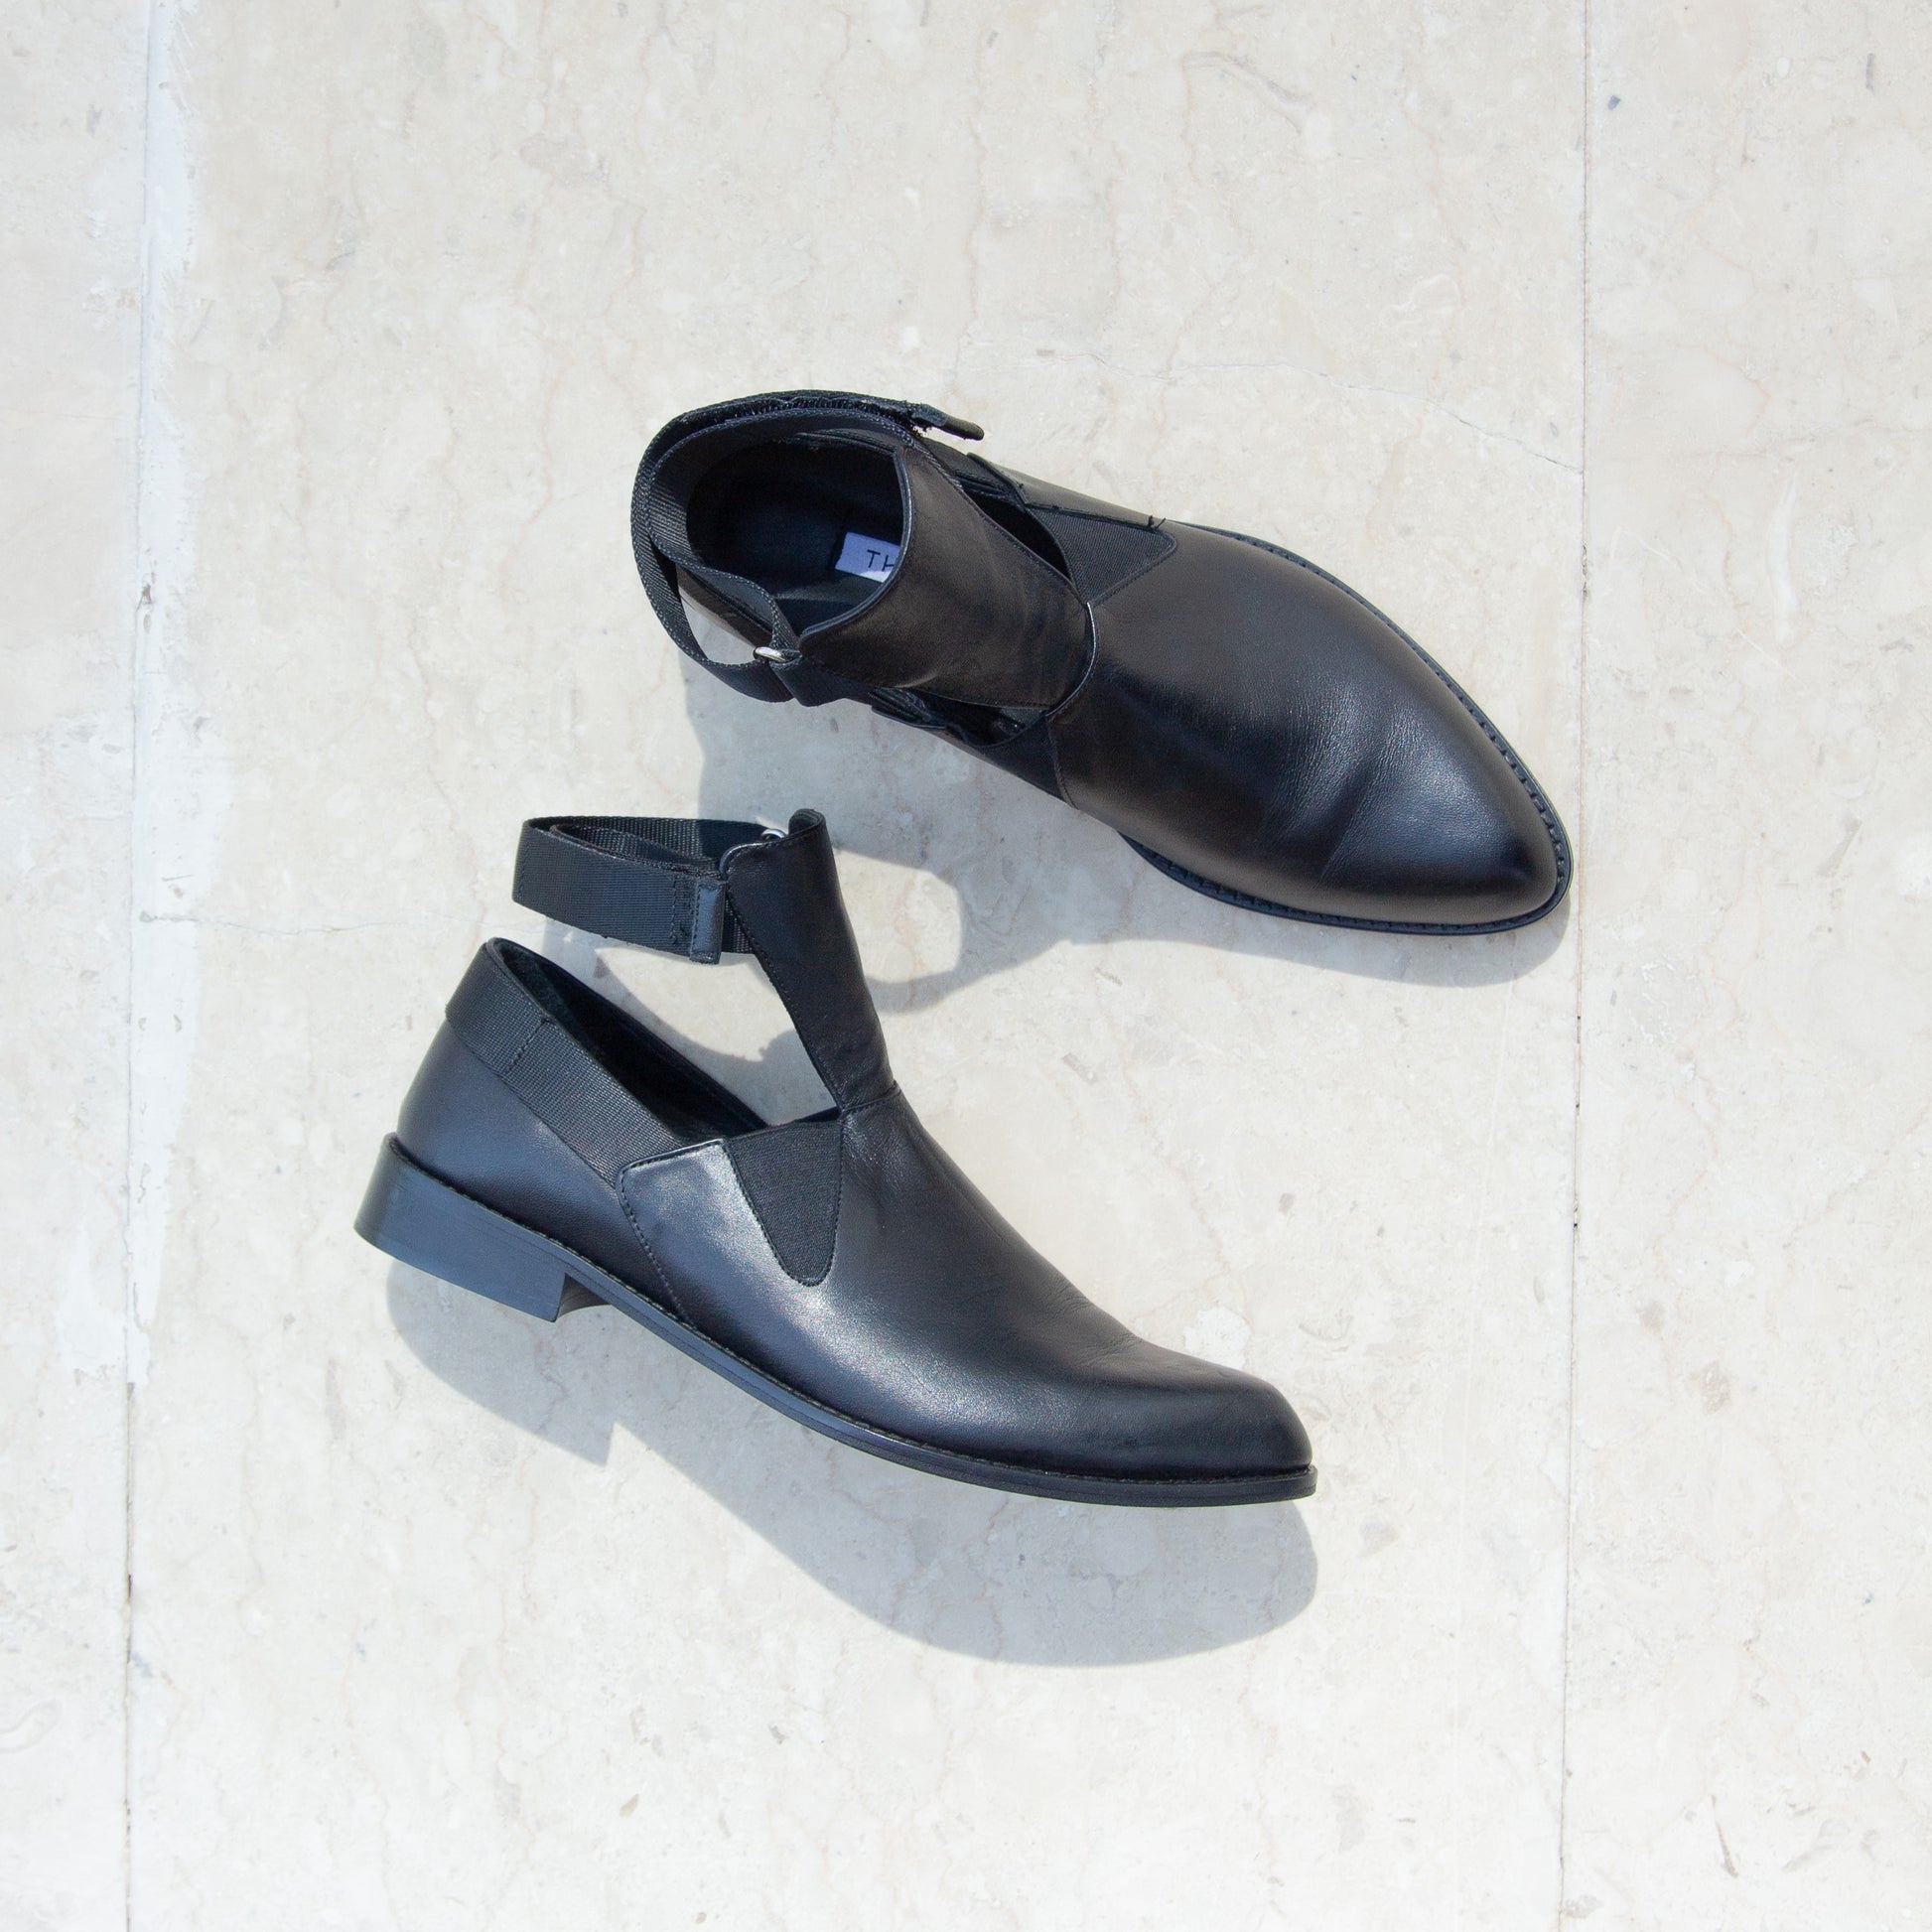 Mirah black boot - Oxfords - kuwait - Ksa- shoes